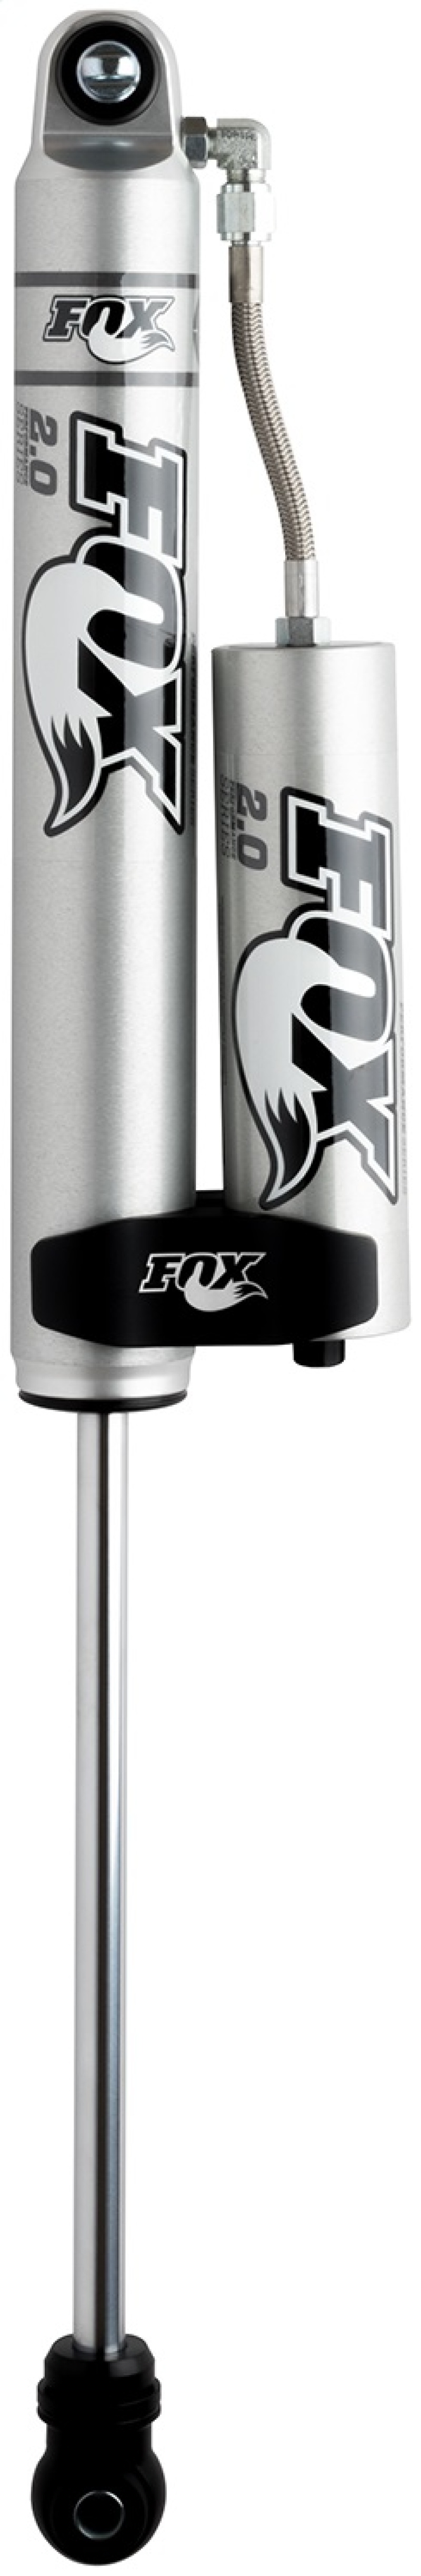 Fox Shox 985-24-111 Shock 2.0 Smooth Body Reservoir For Cherokee Wrangler 84-06